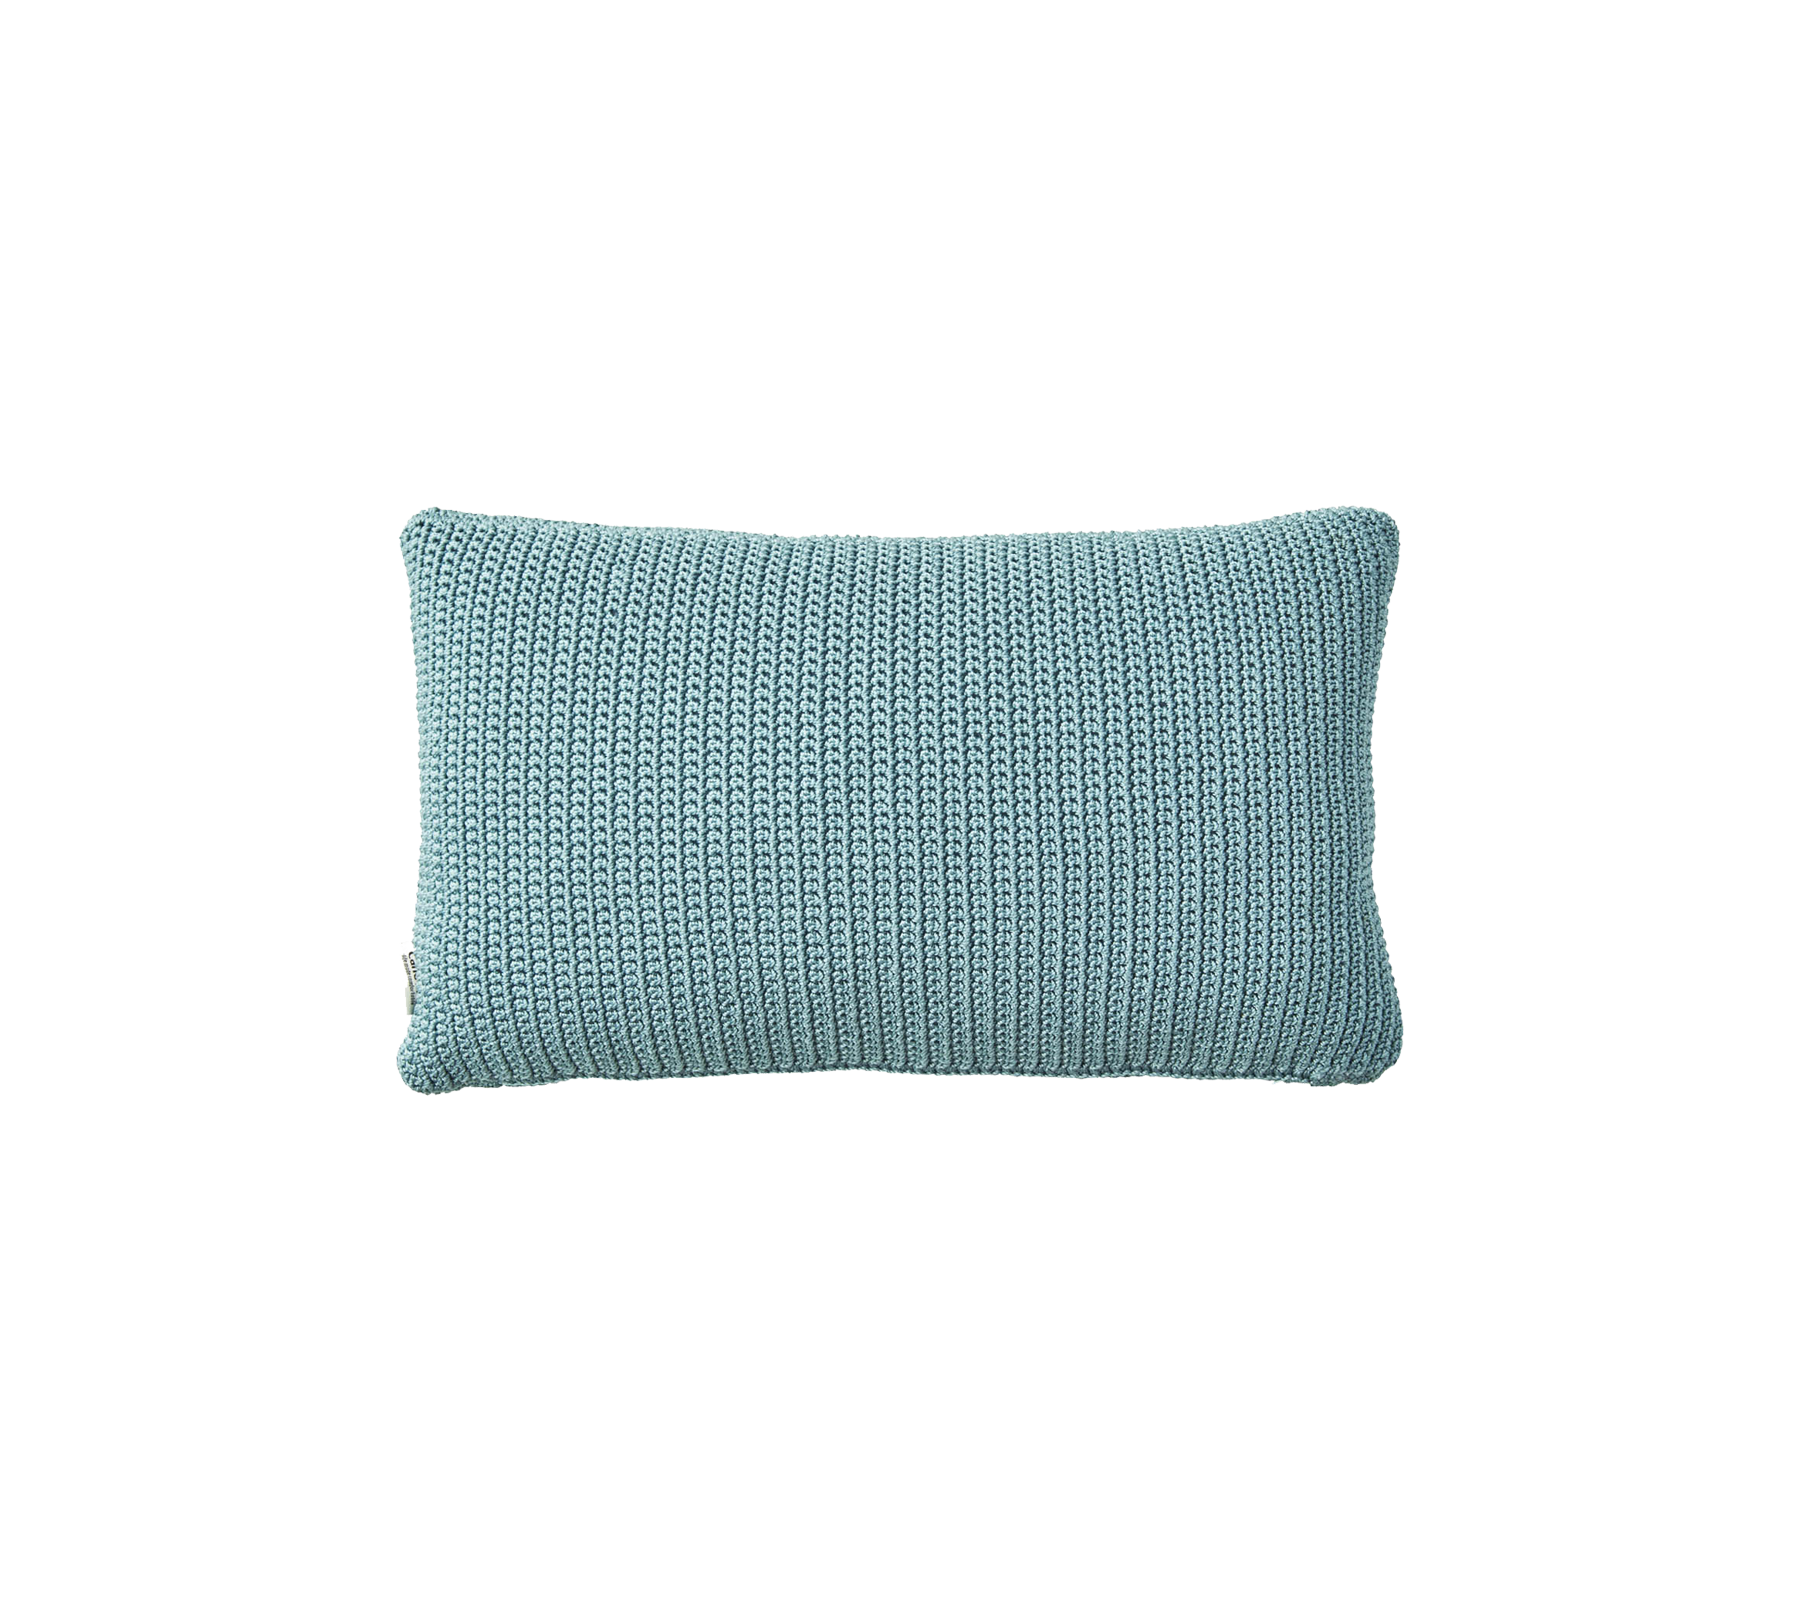 Divine scatter cushion, 32x52x12 cm